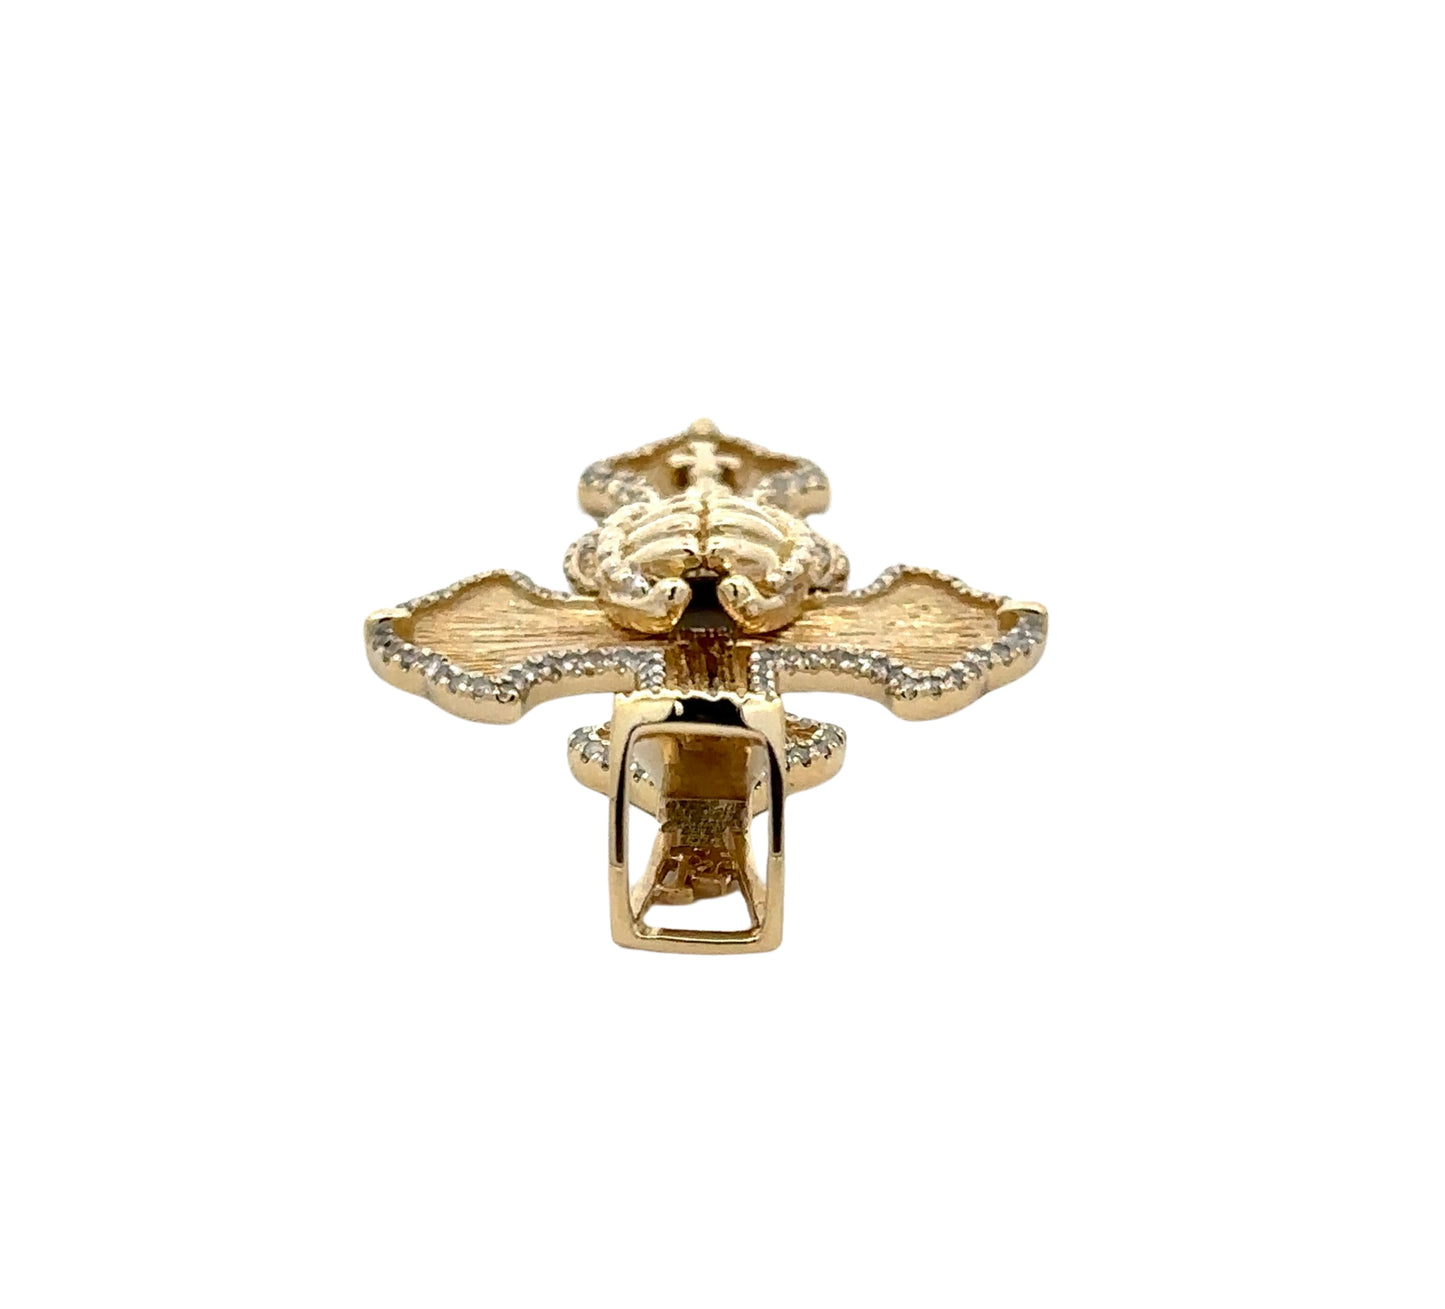 Top of yellow gold cross pendant